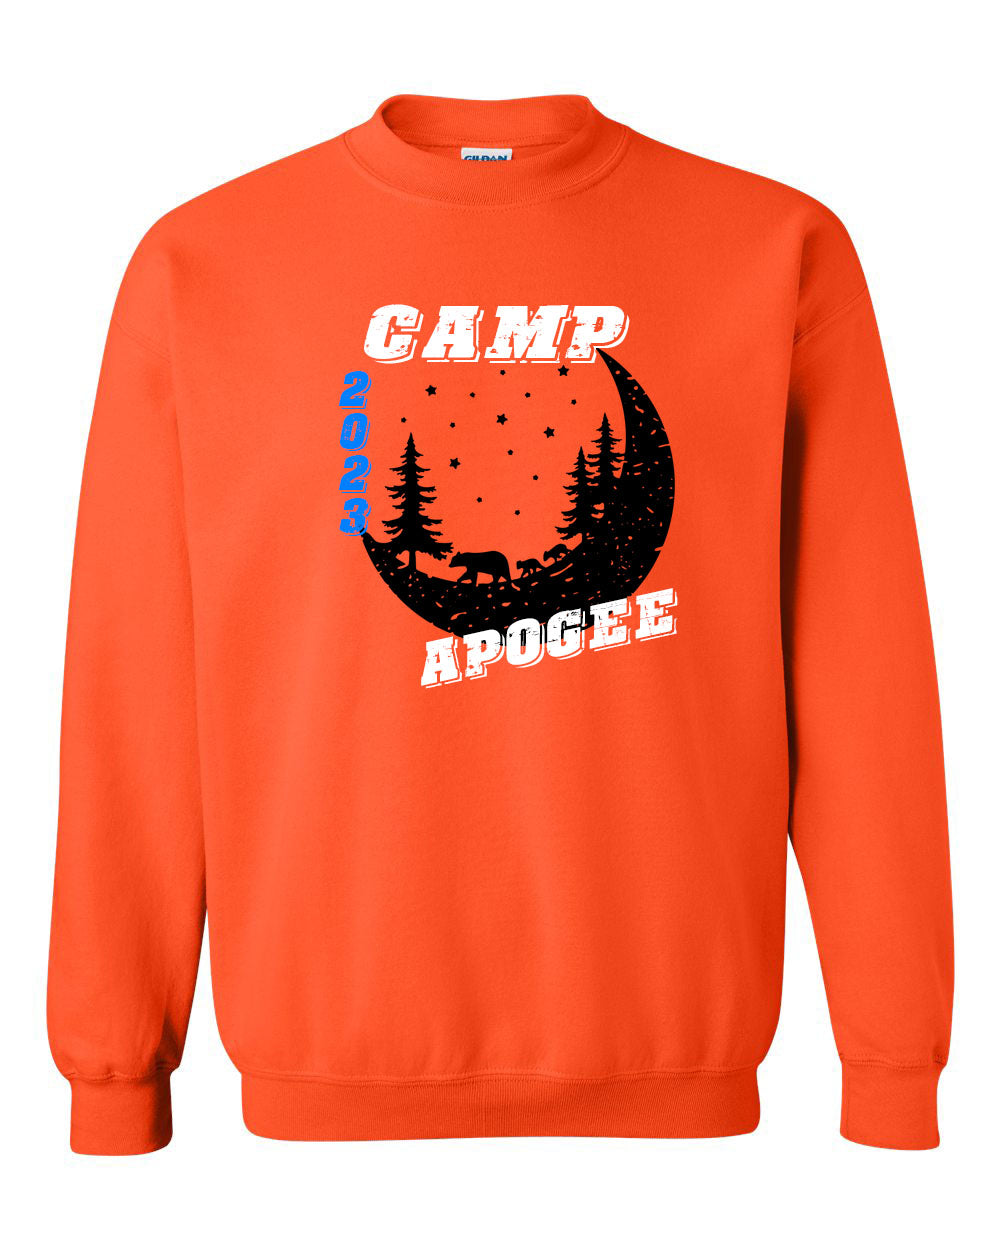 Hilltop Camp Design 1 non hooded sweatshirt